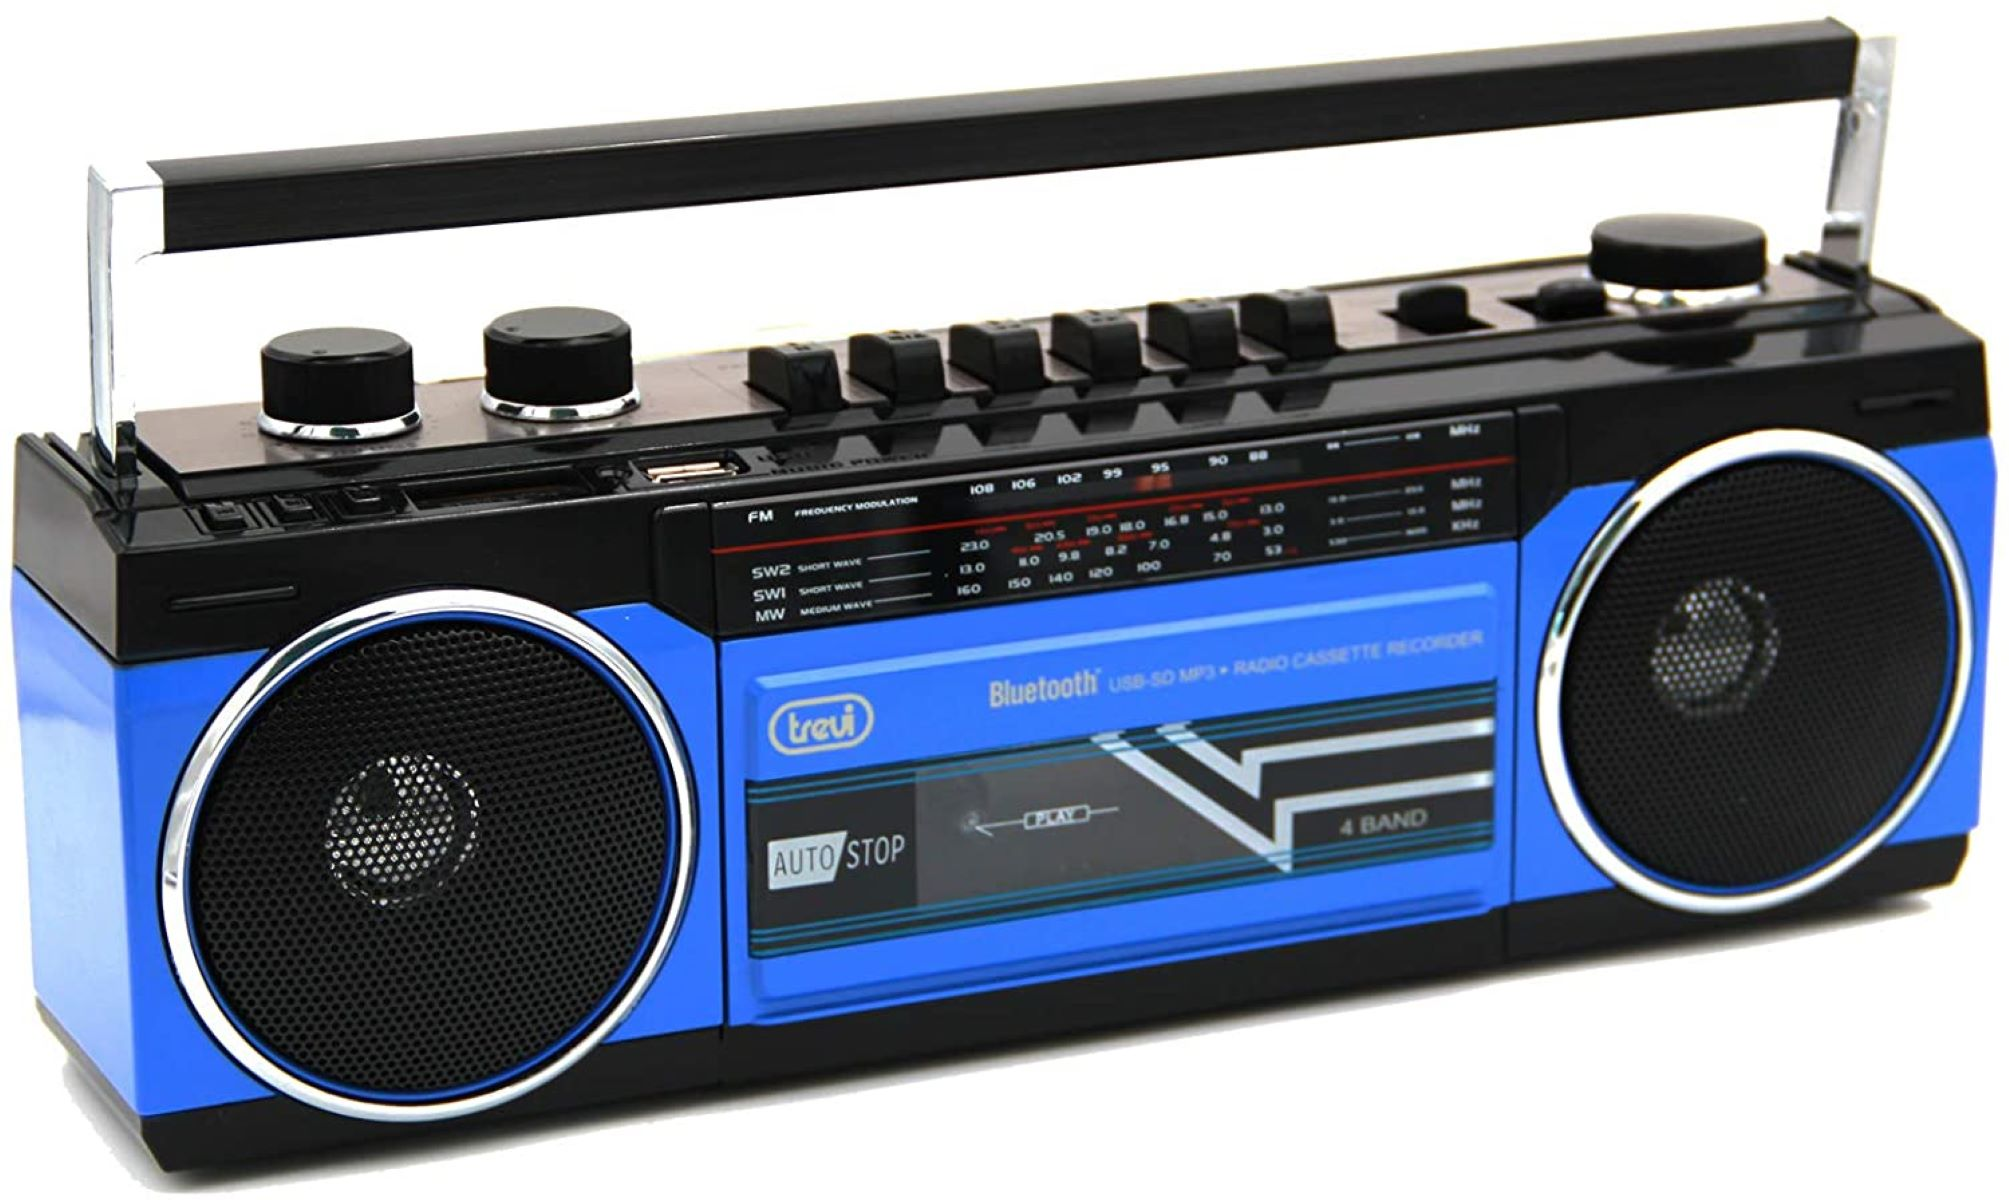 Blau DAB, Radiorekorder RR Bluetooth, TREVI 501 Radio,